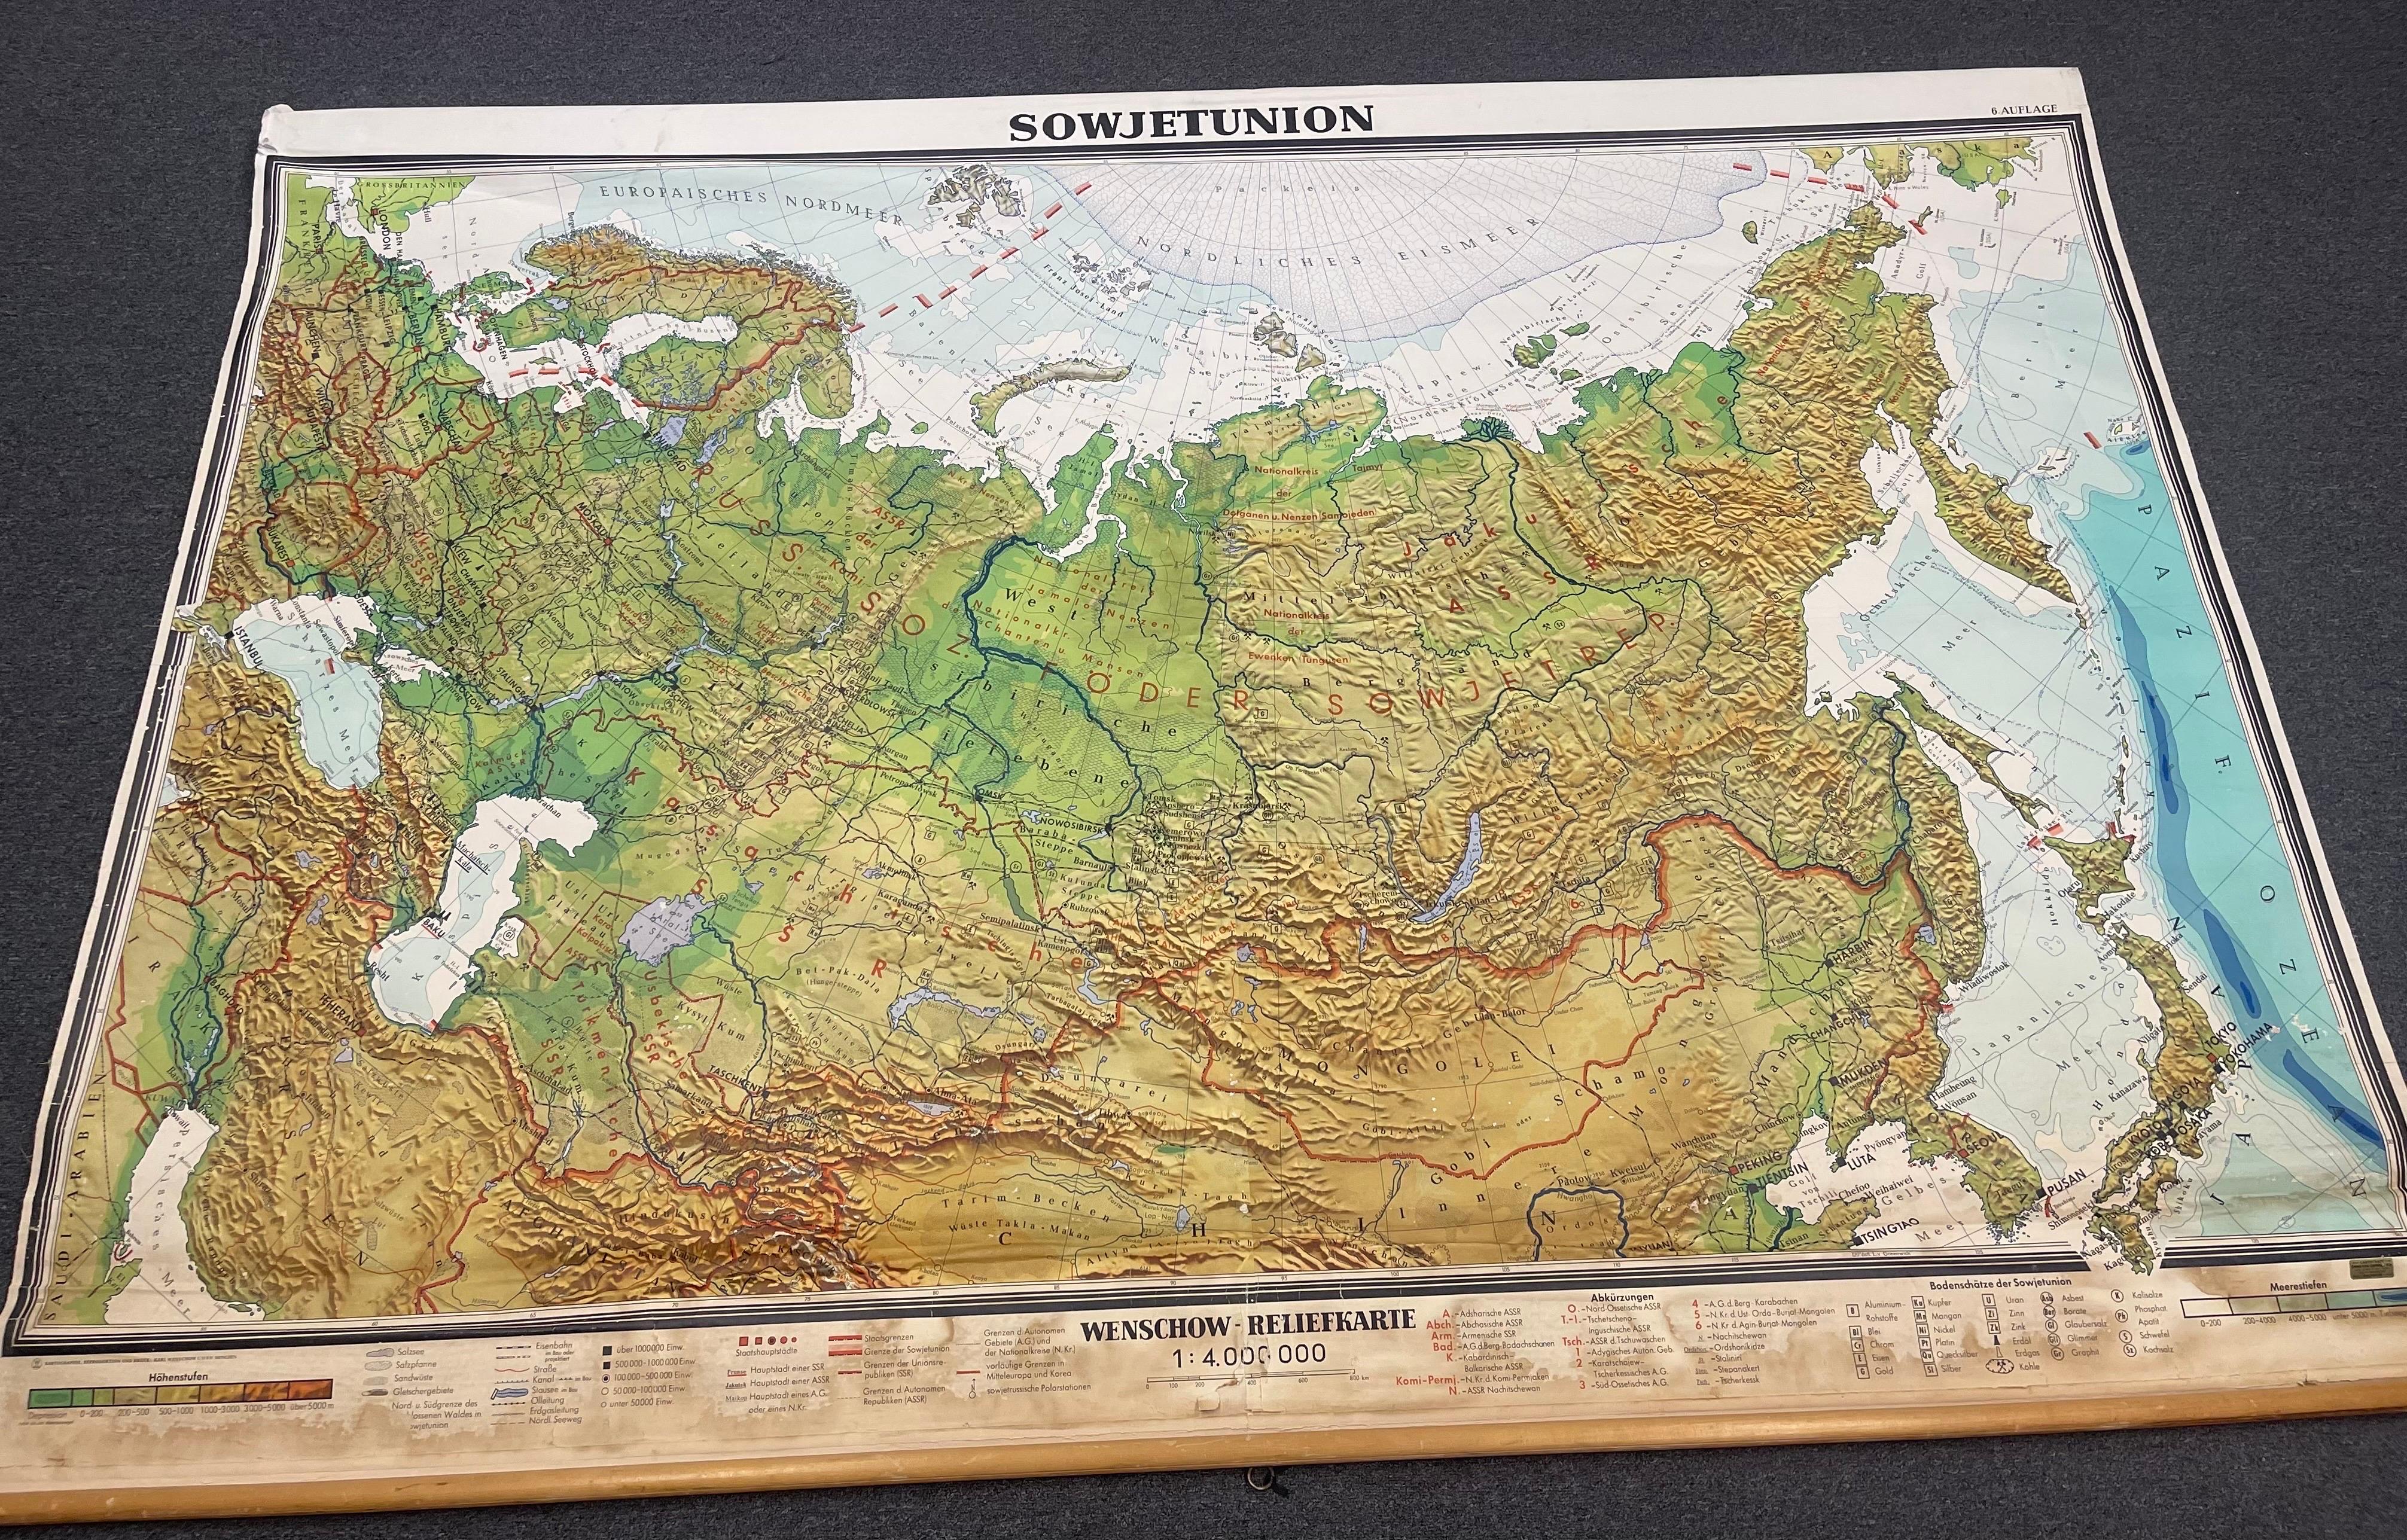 sowjetunion map